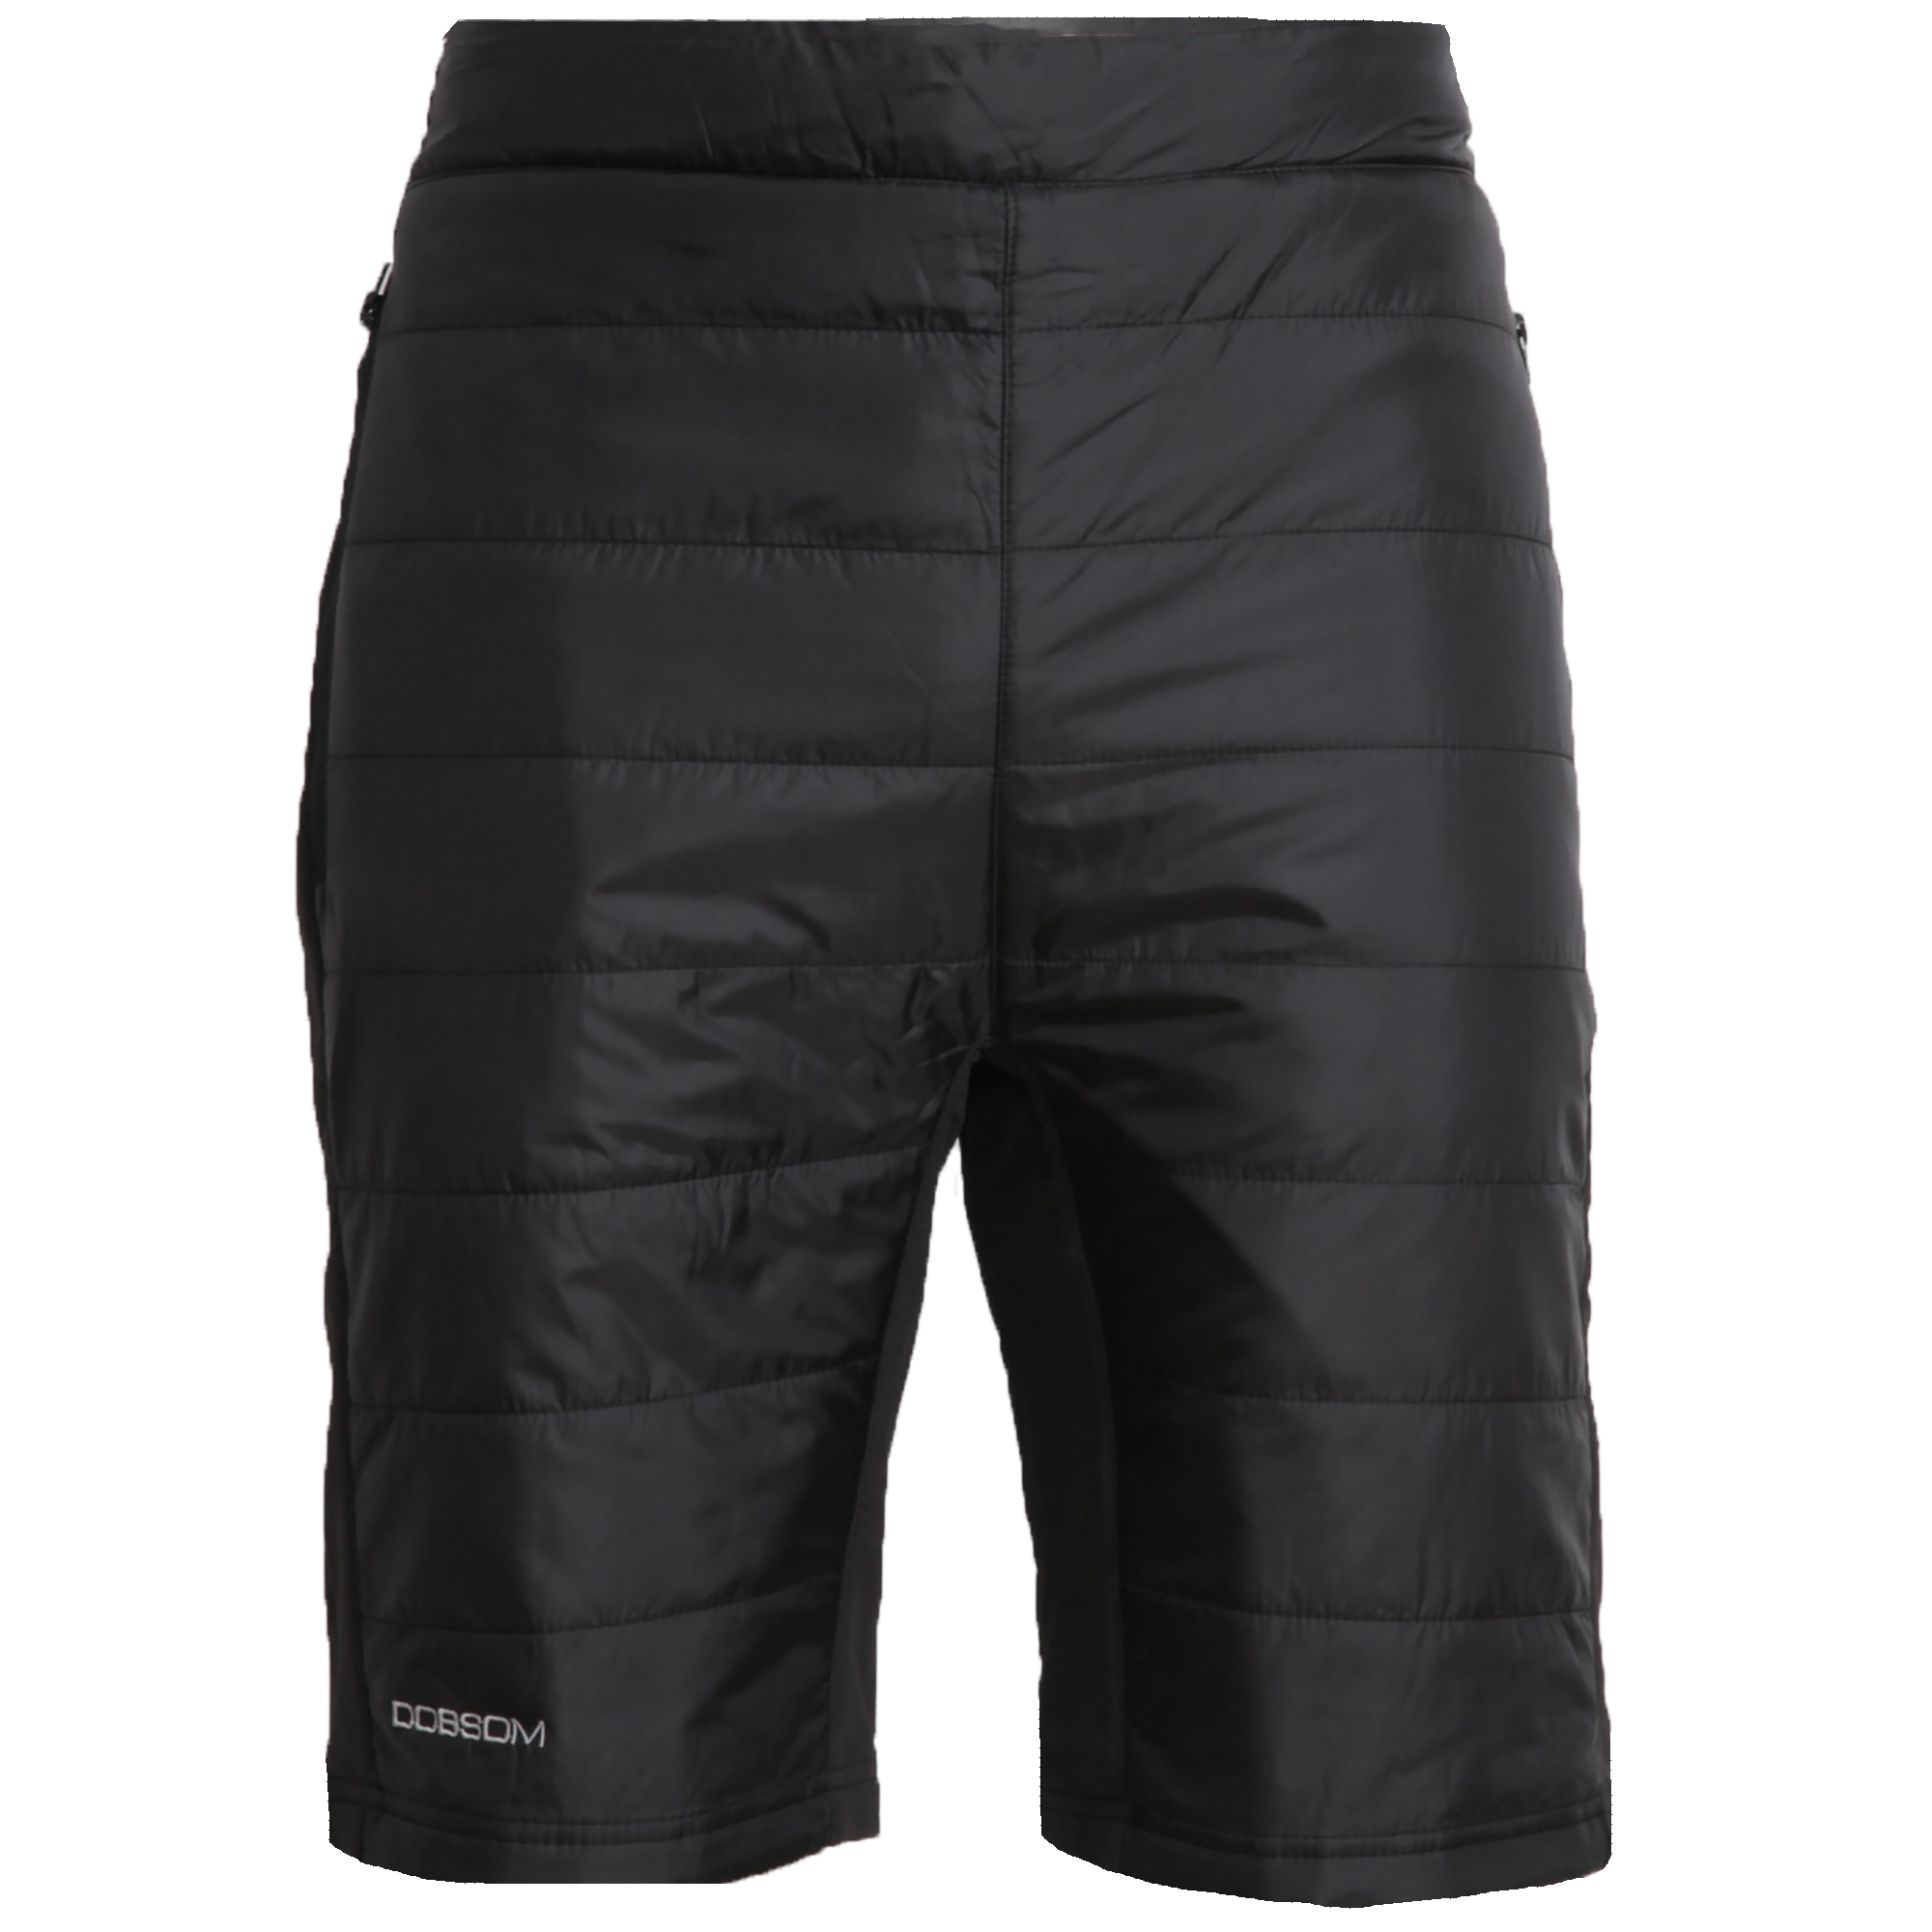 Dobsom Men's Vivid Shorts Black XXL, Black